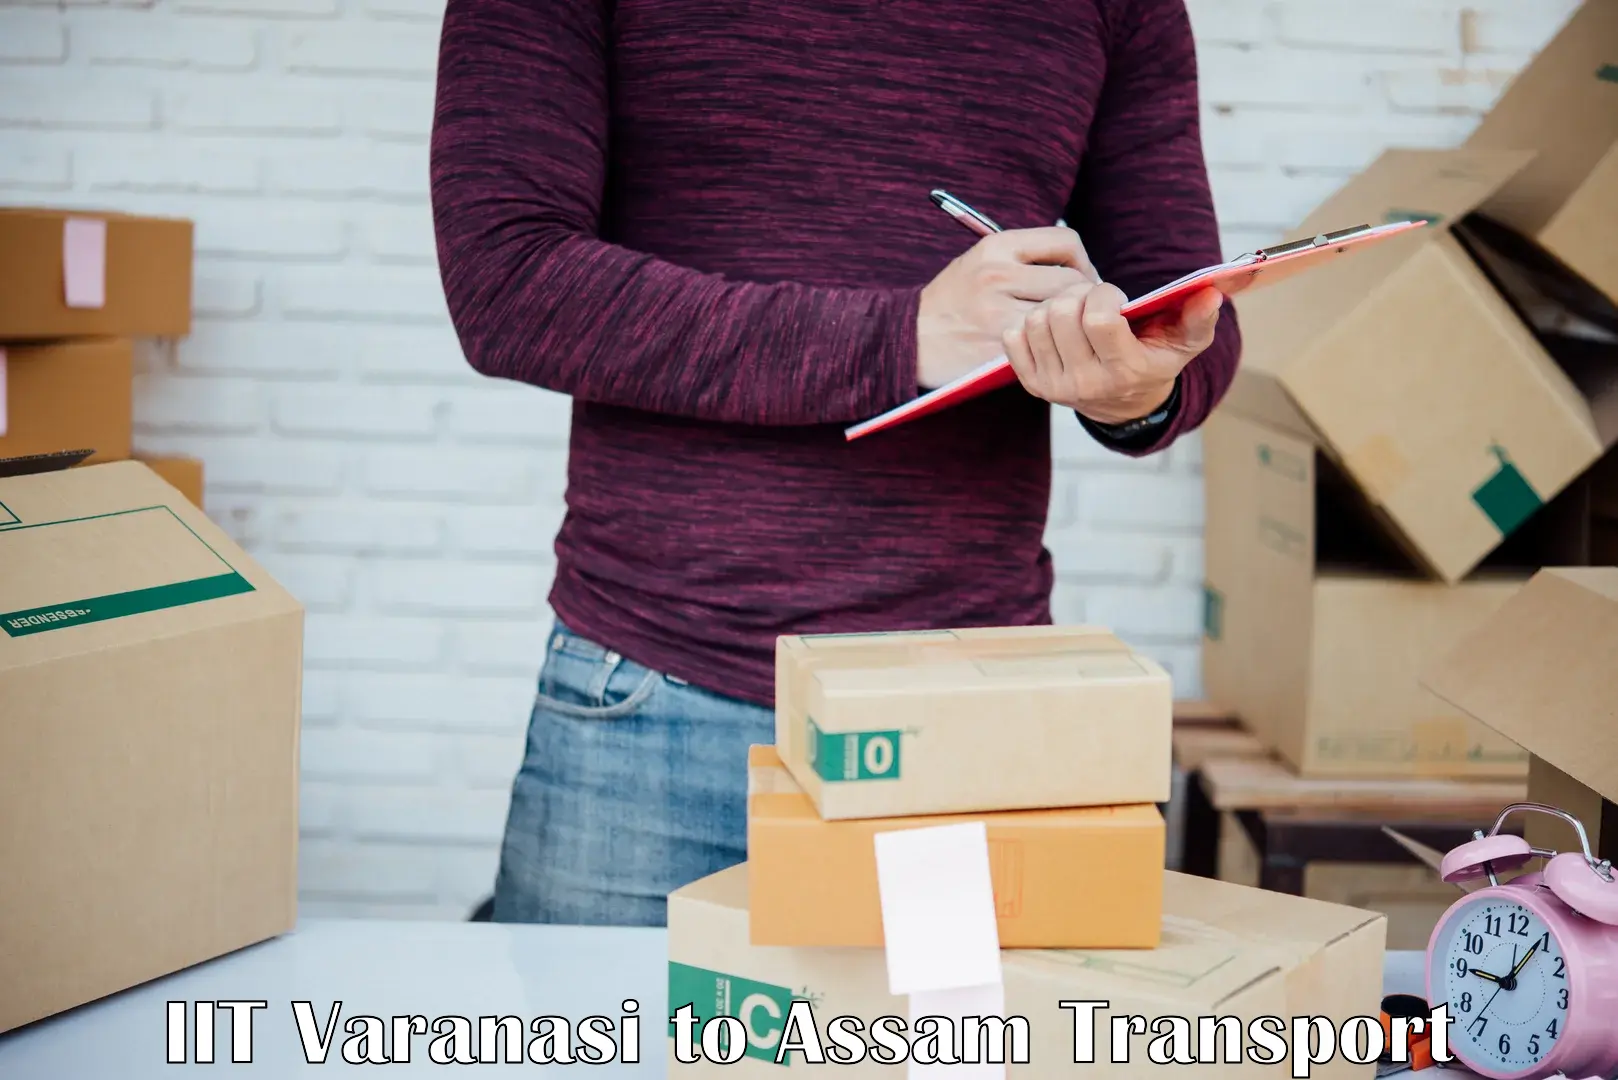 Delivery service IIT Varanasi to Amoni